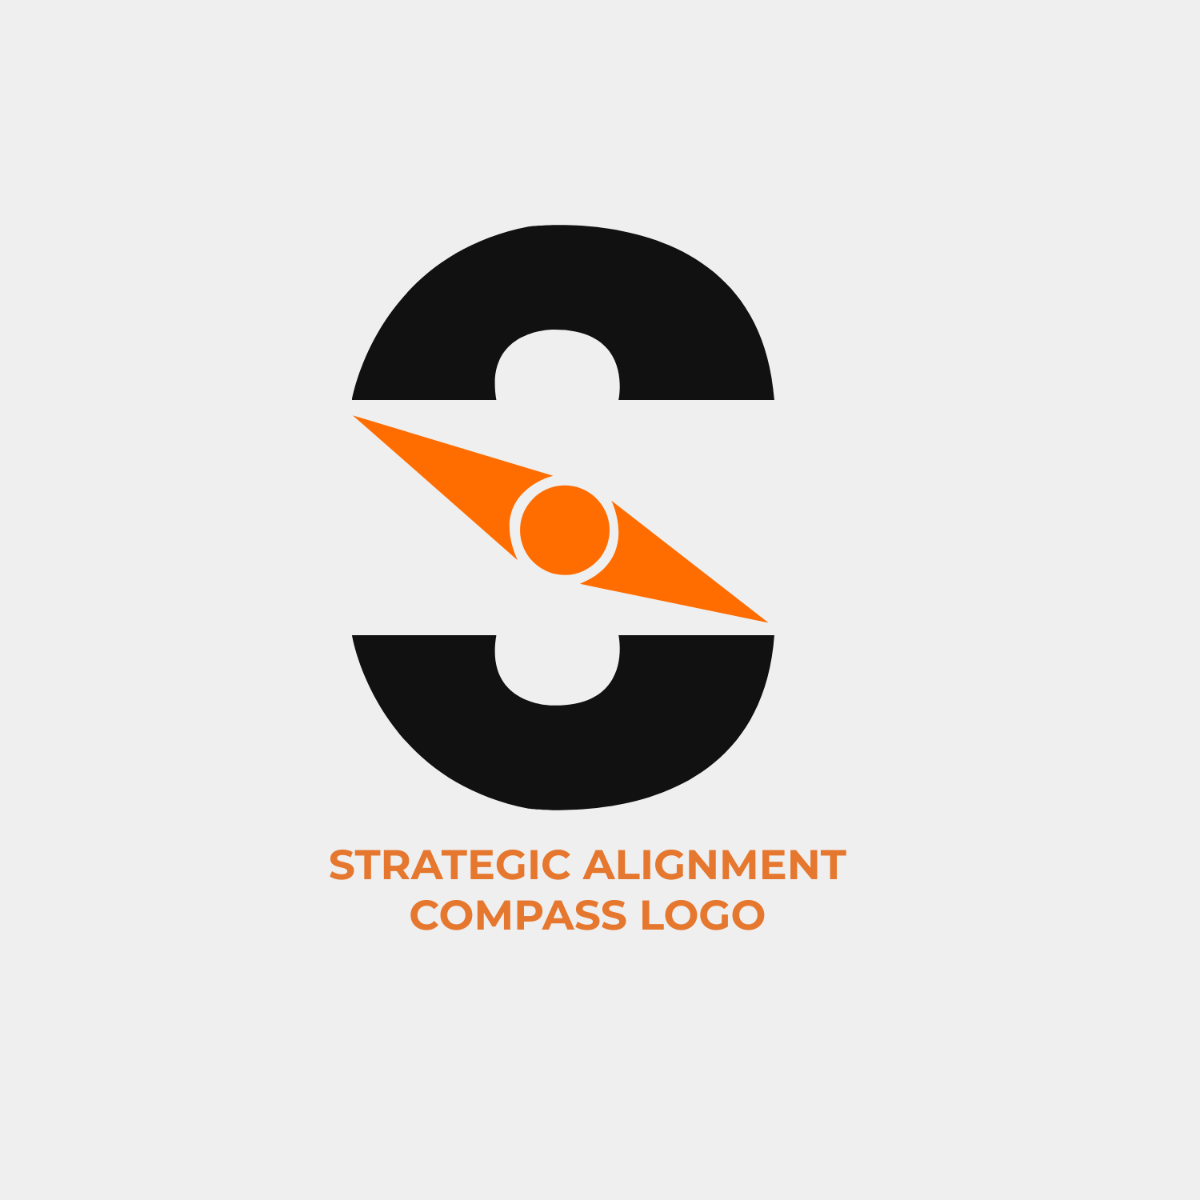 Strategic Alignment Compass Logo